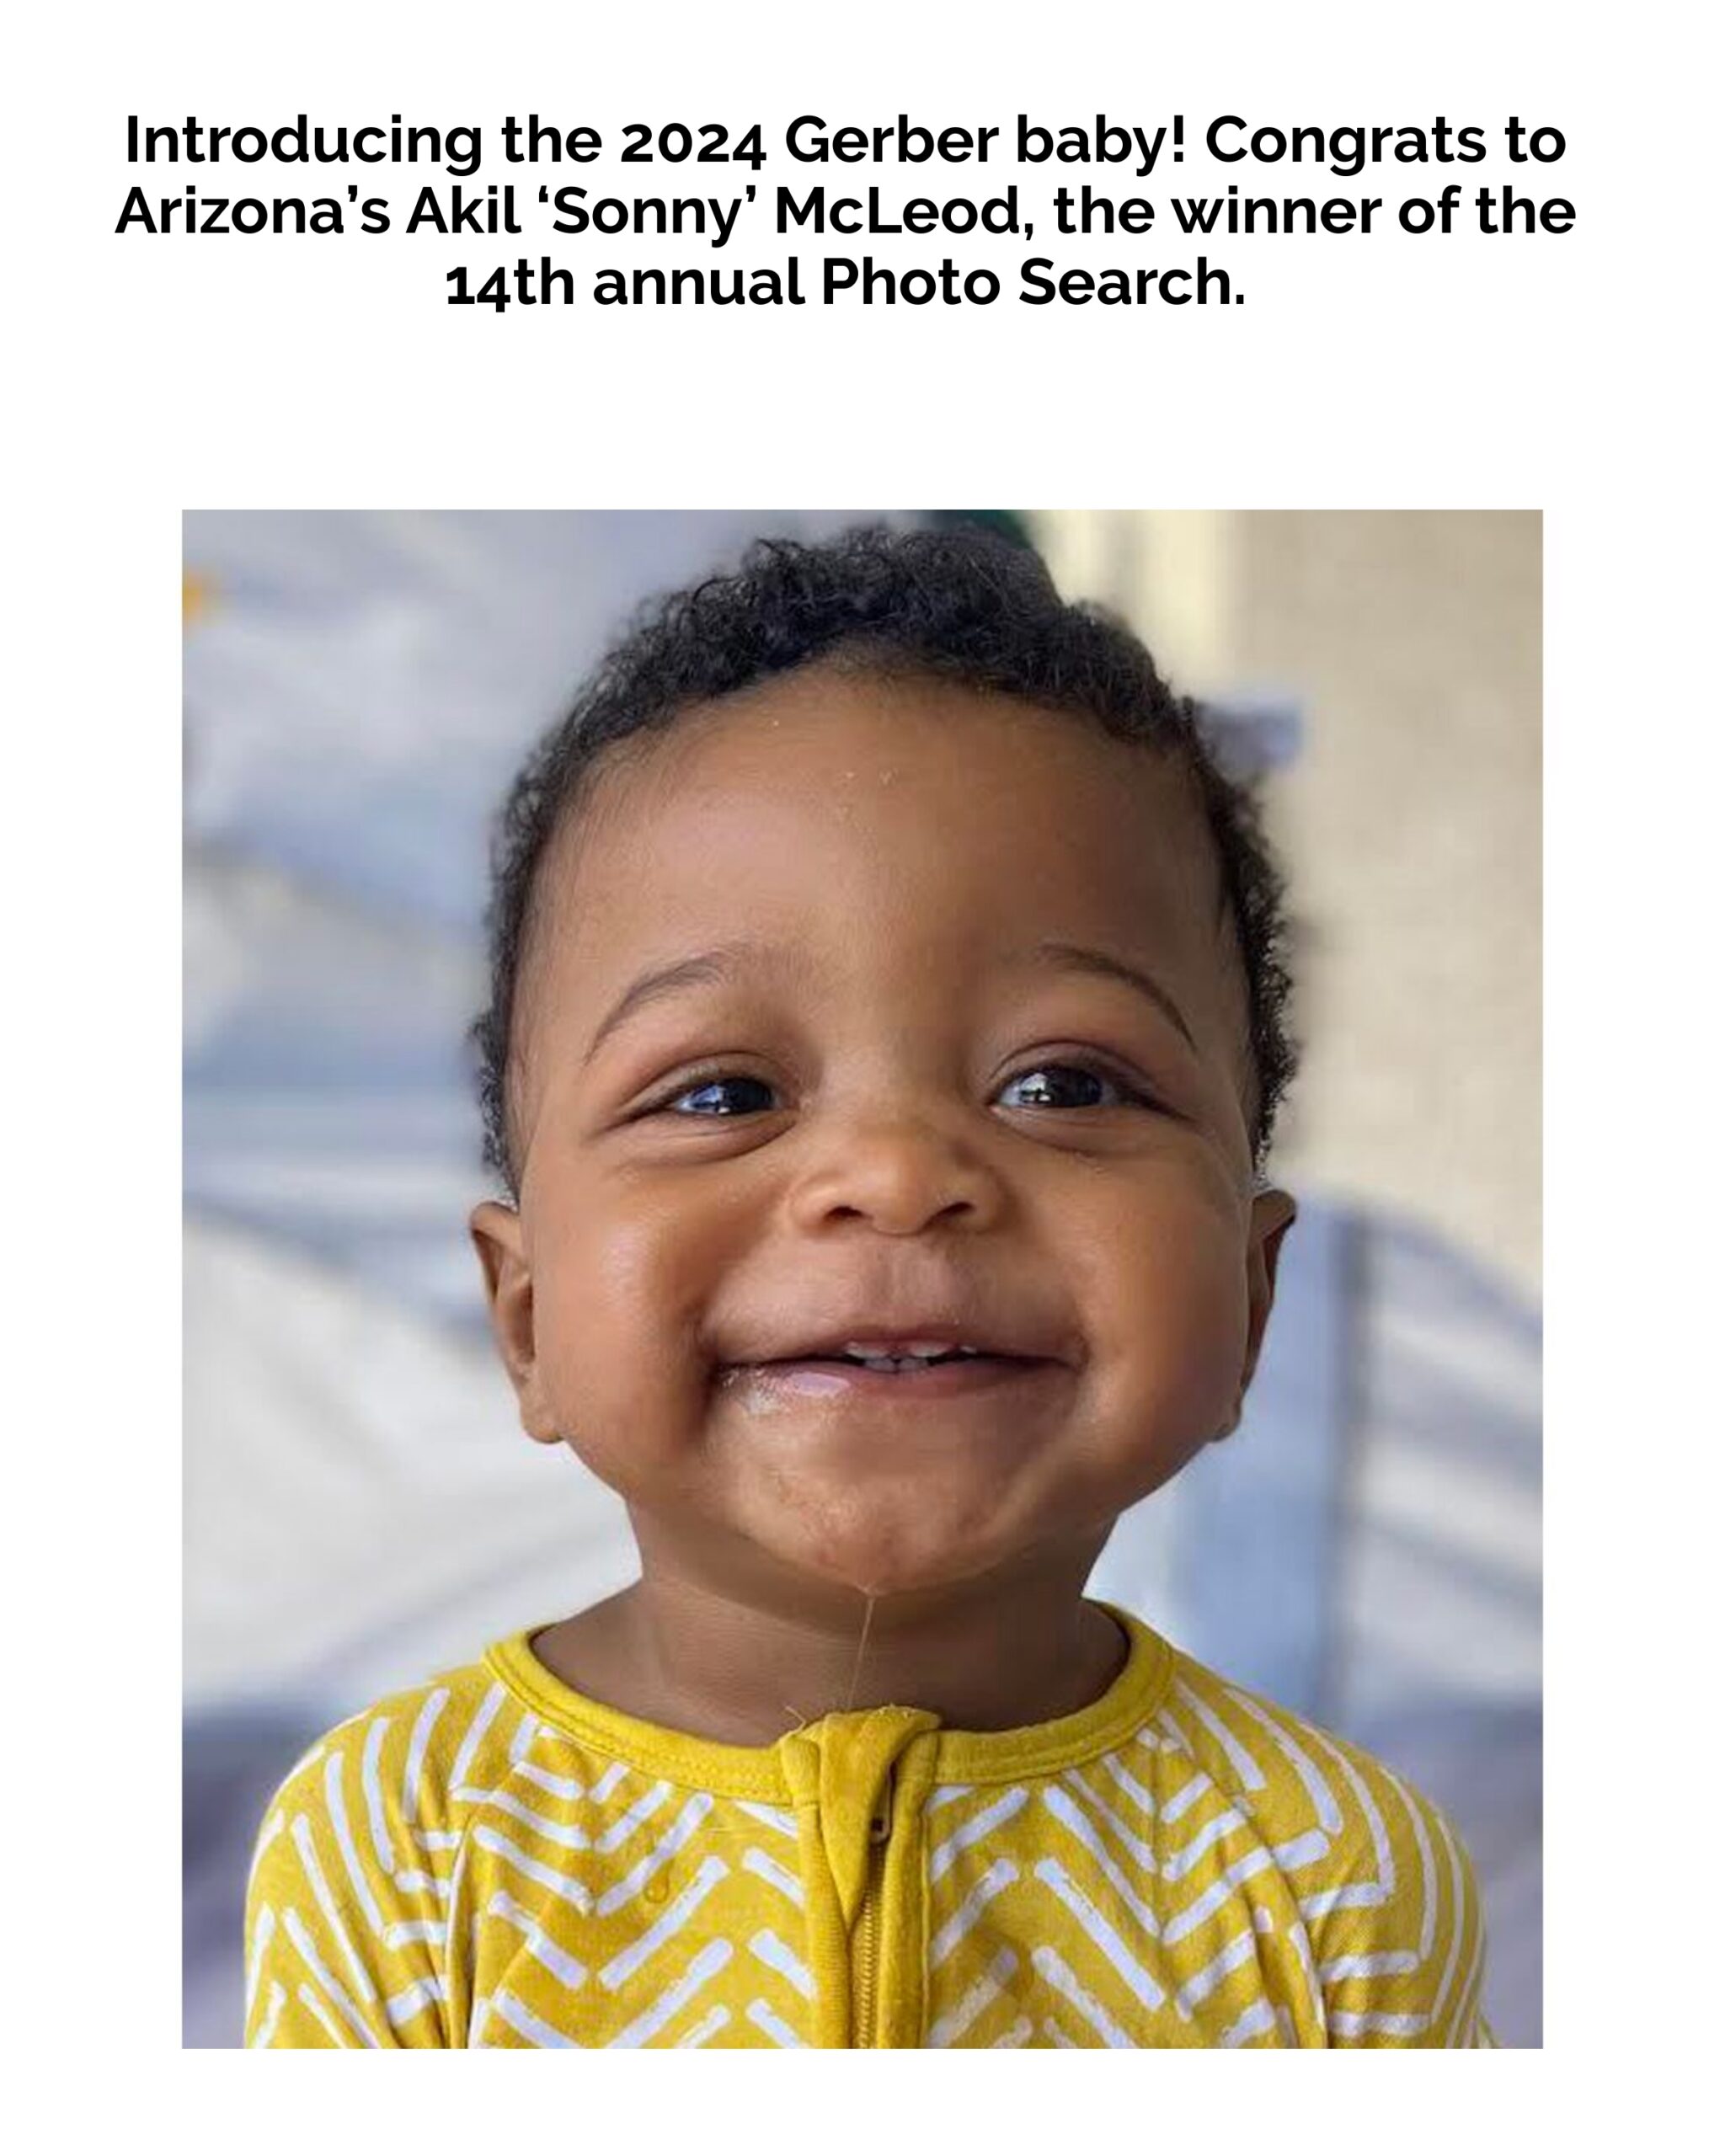 Meet the 2024 Gerber Baby, Arizona’s Akil ‘Sonny’ McLeod: ‘It’s an Honor’